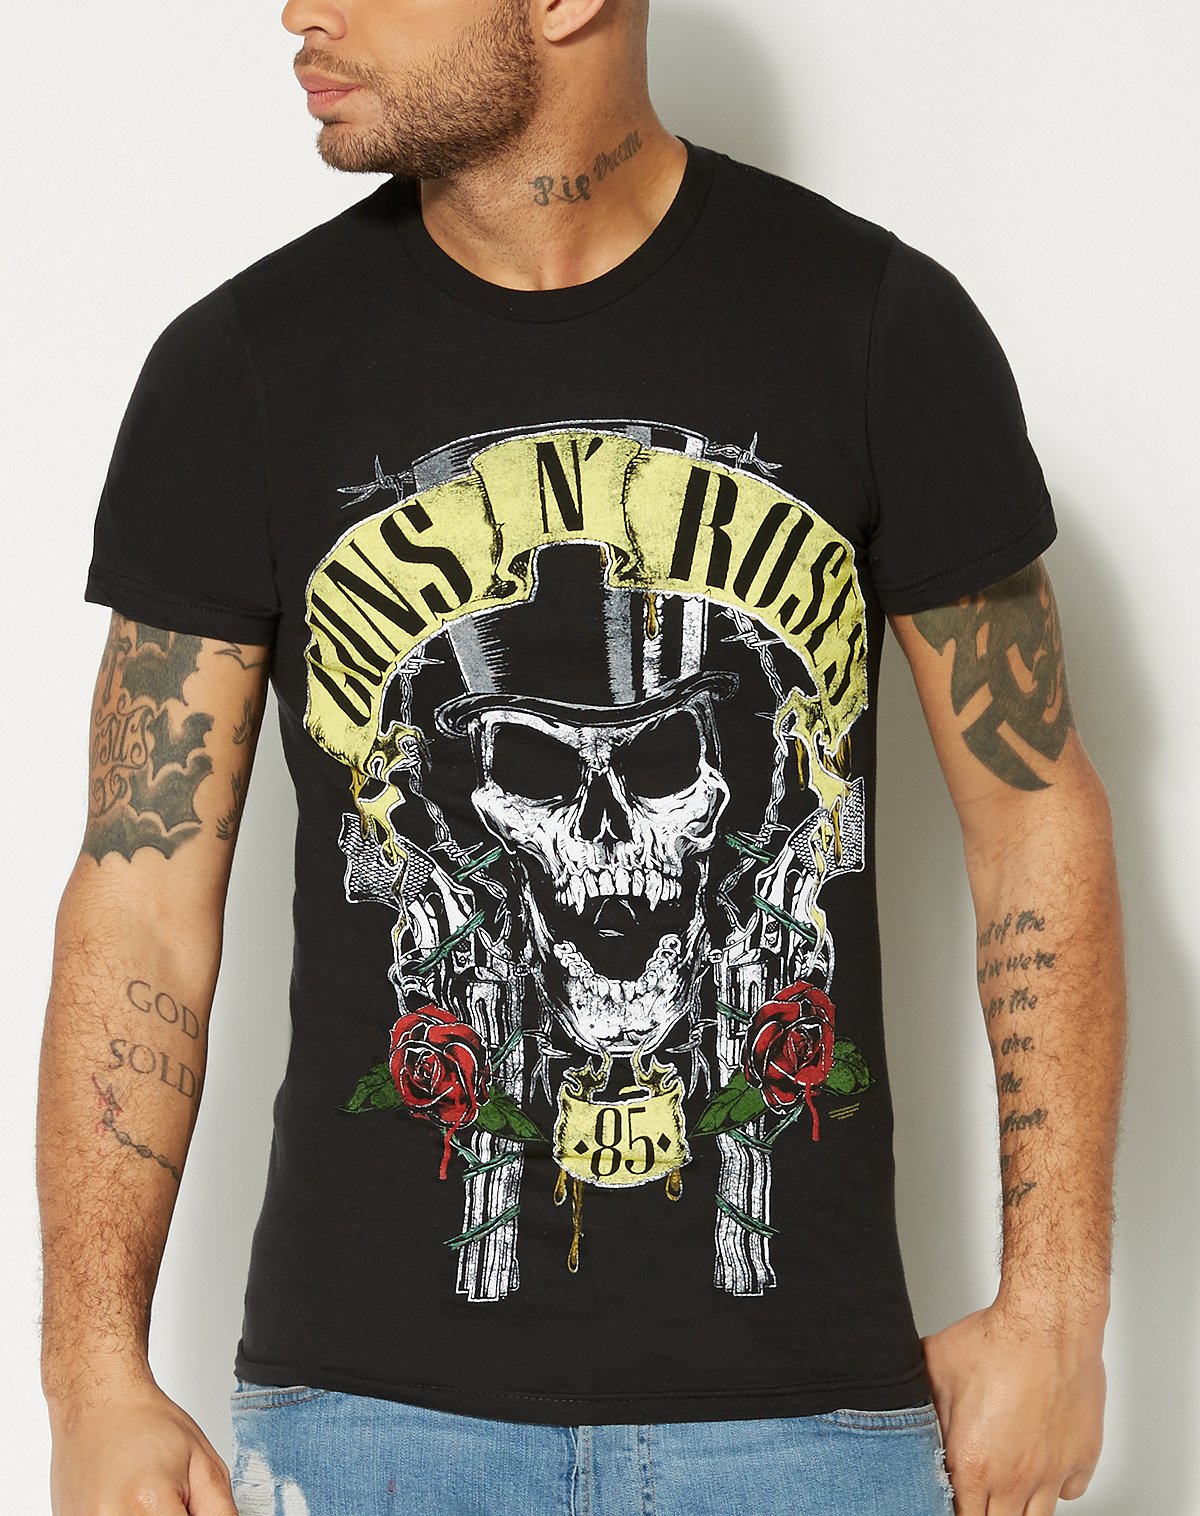 Top Hats Guns N' Roses T Shirt
